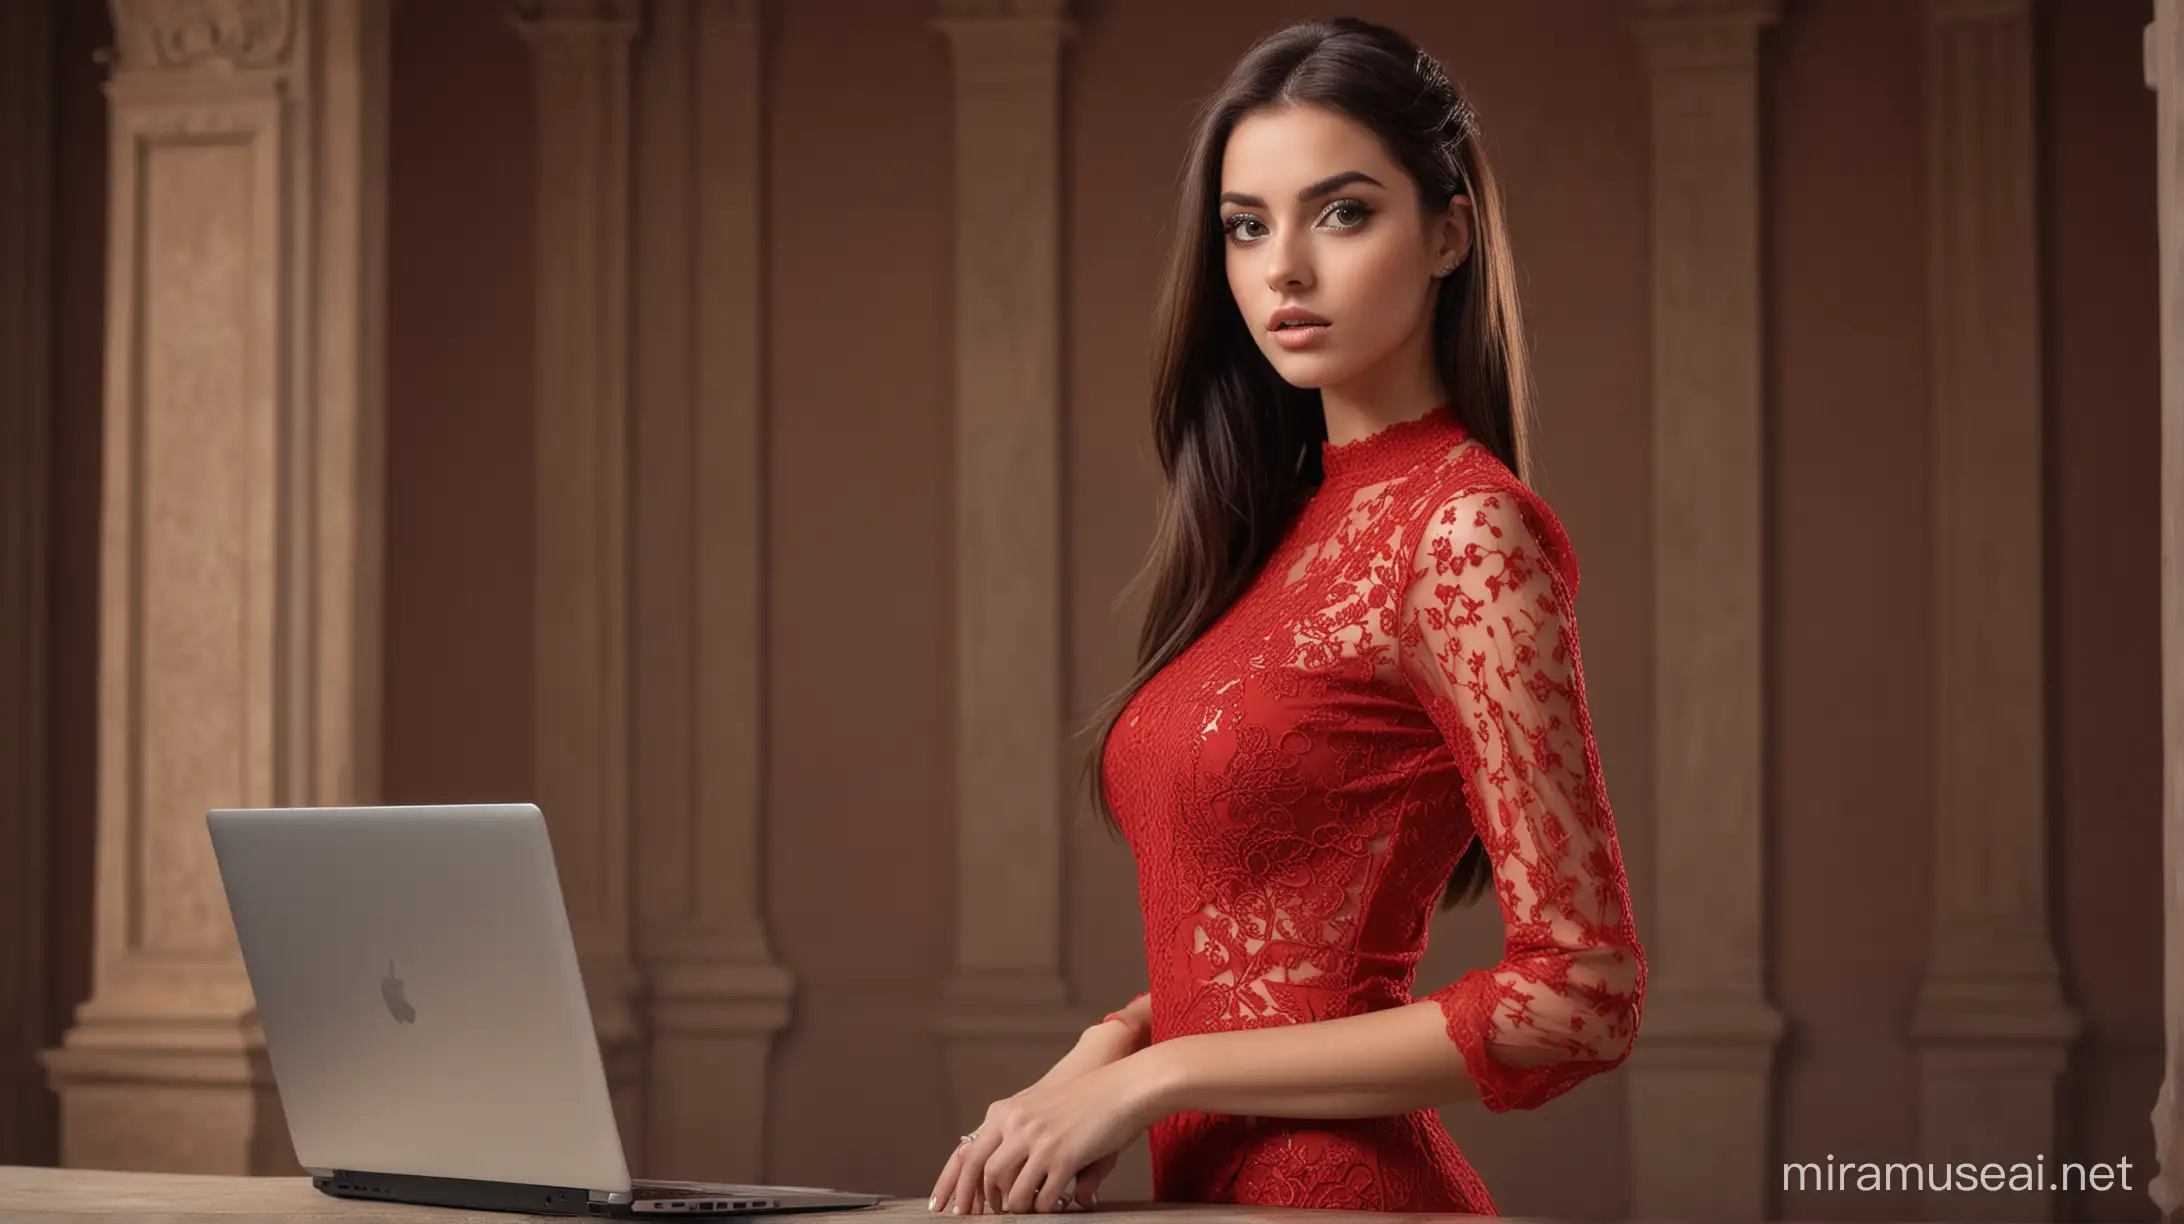 European Arabian Model in Red Dress Poses in Luxurious Office Setting